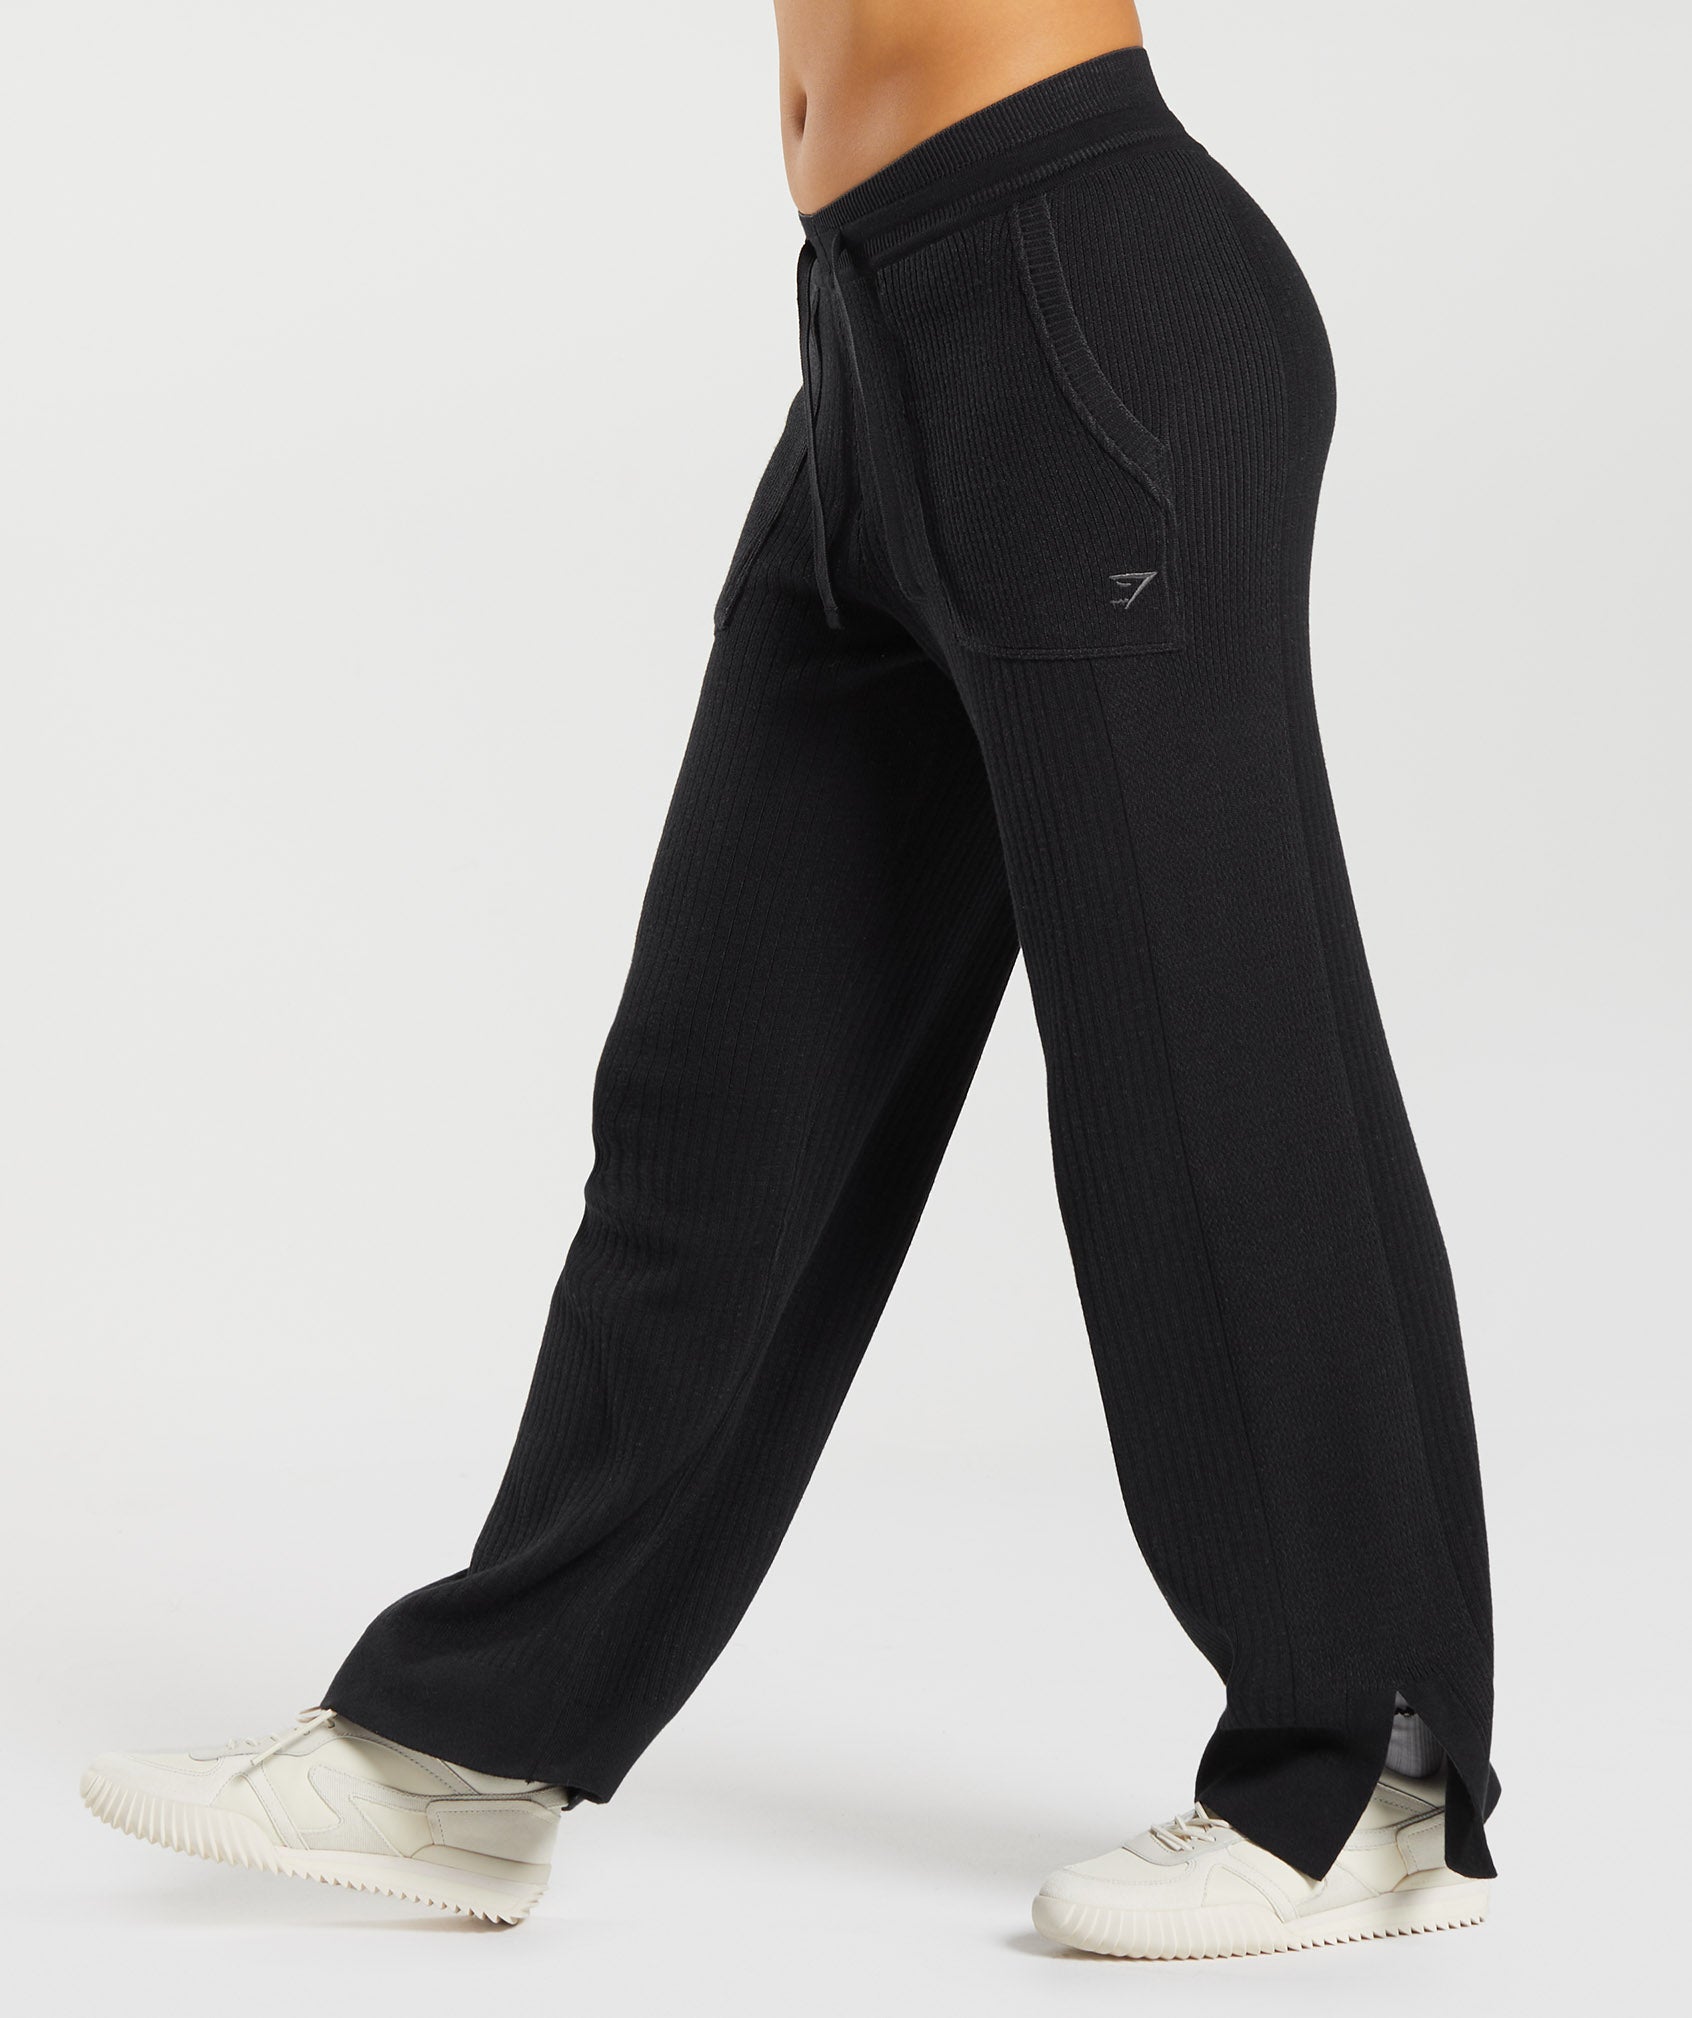 GYMSHARK CREST JOGGERS Soft Knit Pull On Athletic Pants Women's Black L  £28.13 - PicClick UK